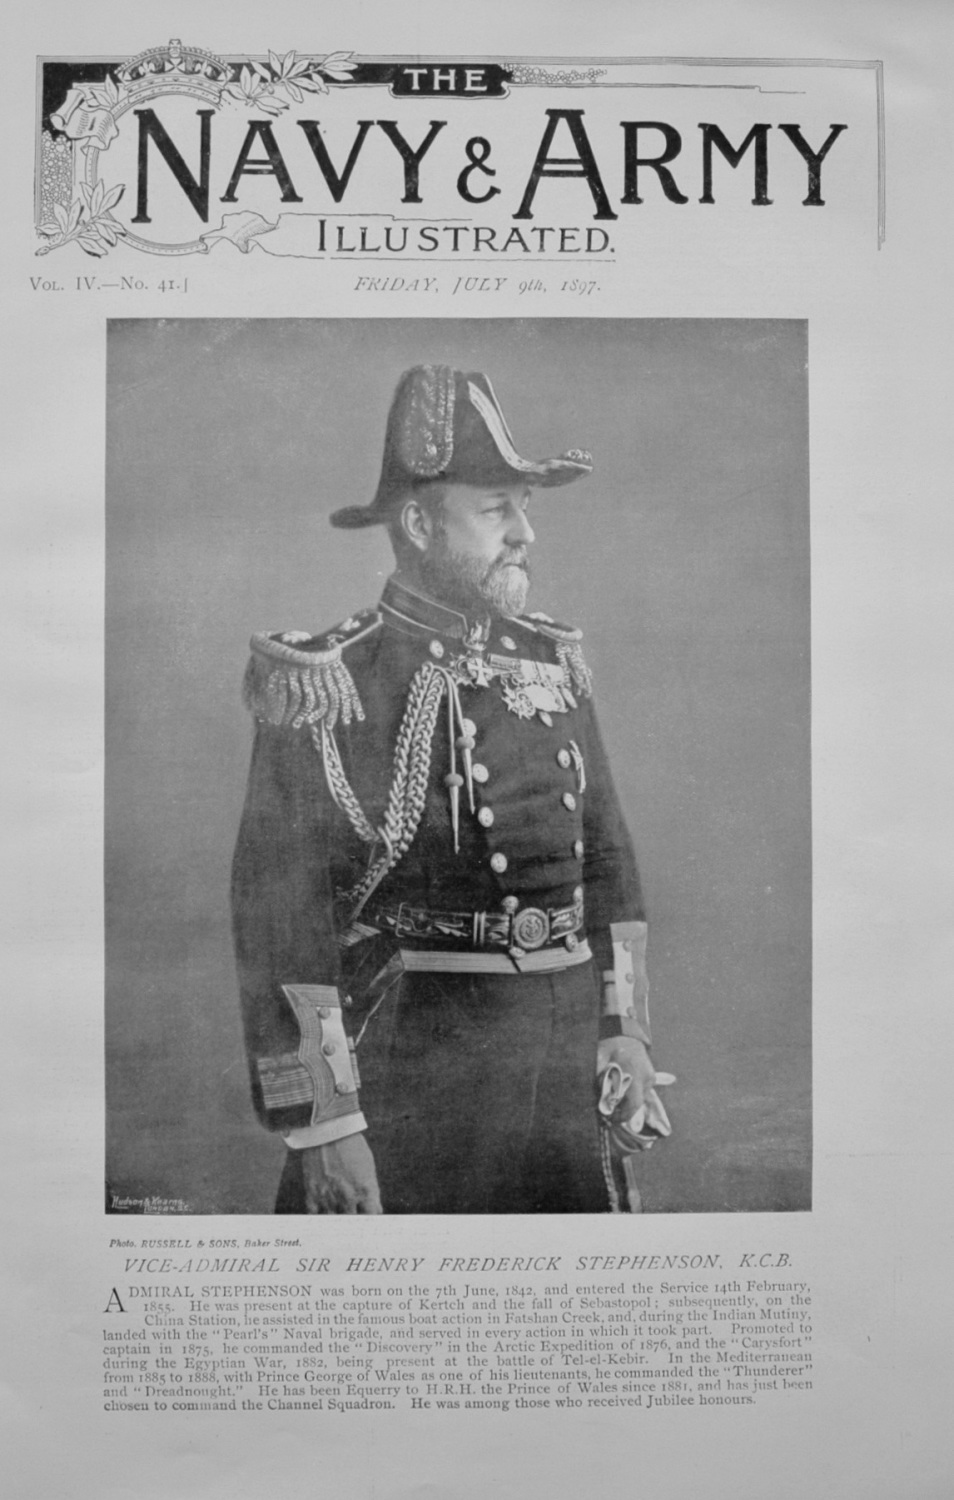 Vice-Admiral Sir Henry Stephenson